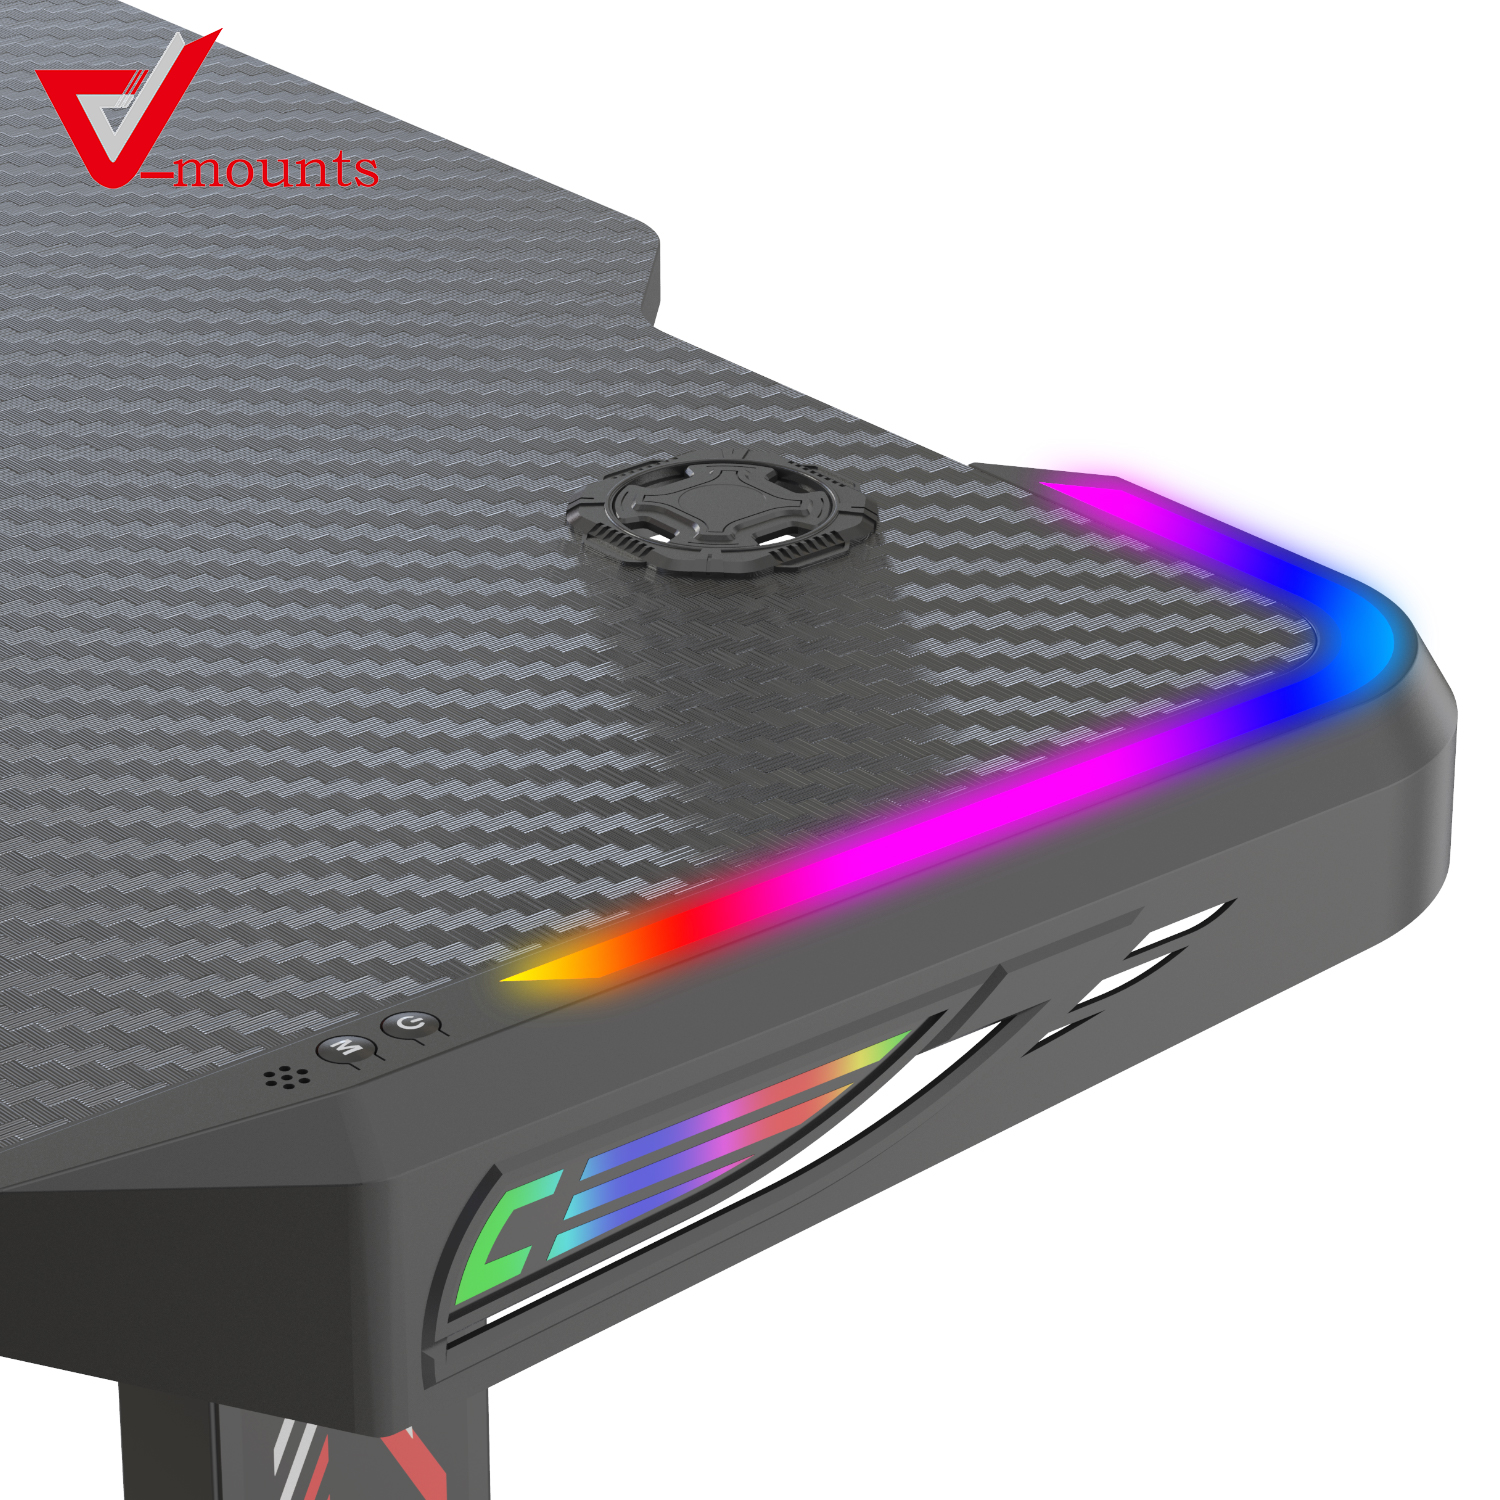 V-mounts ErgoFusion T Shaped RGB Gaming Desk VM-GT03P